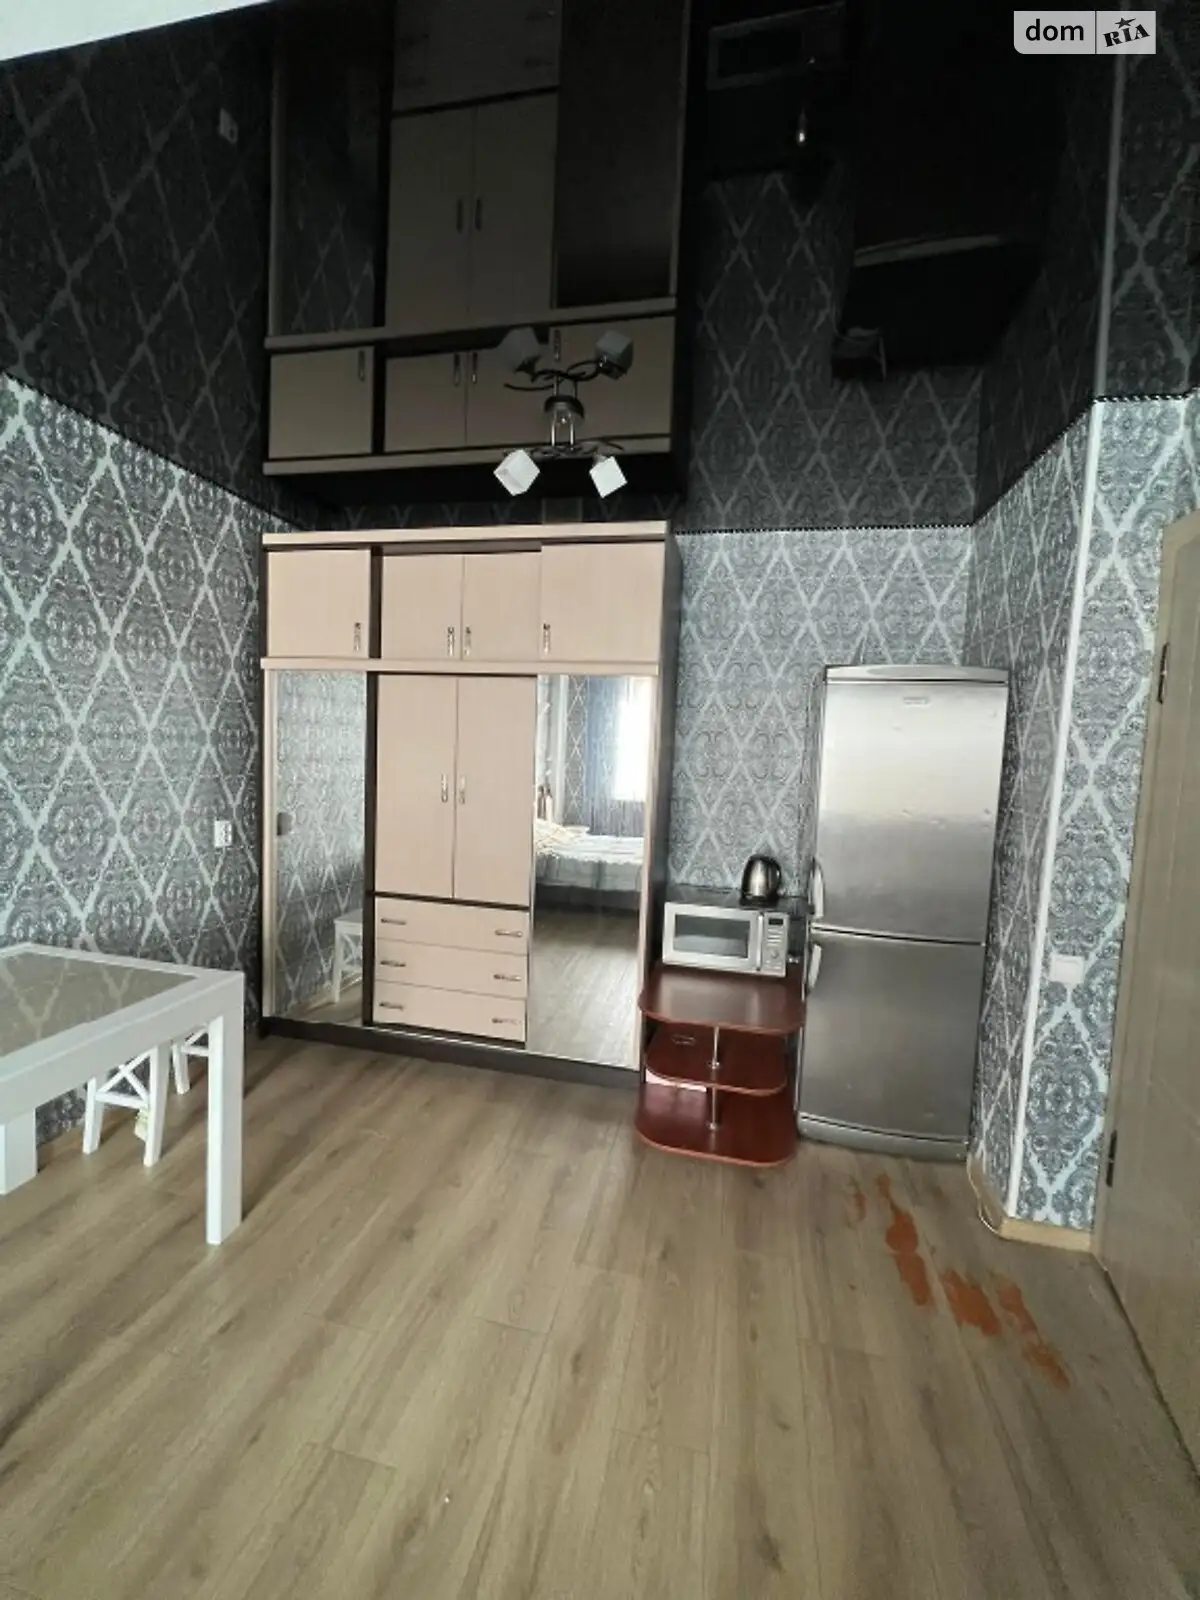 Продается комната 15 кв. м в Харькове - фото 2